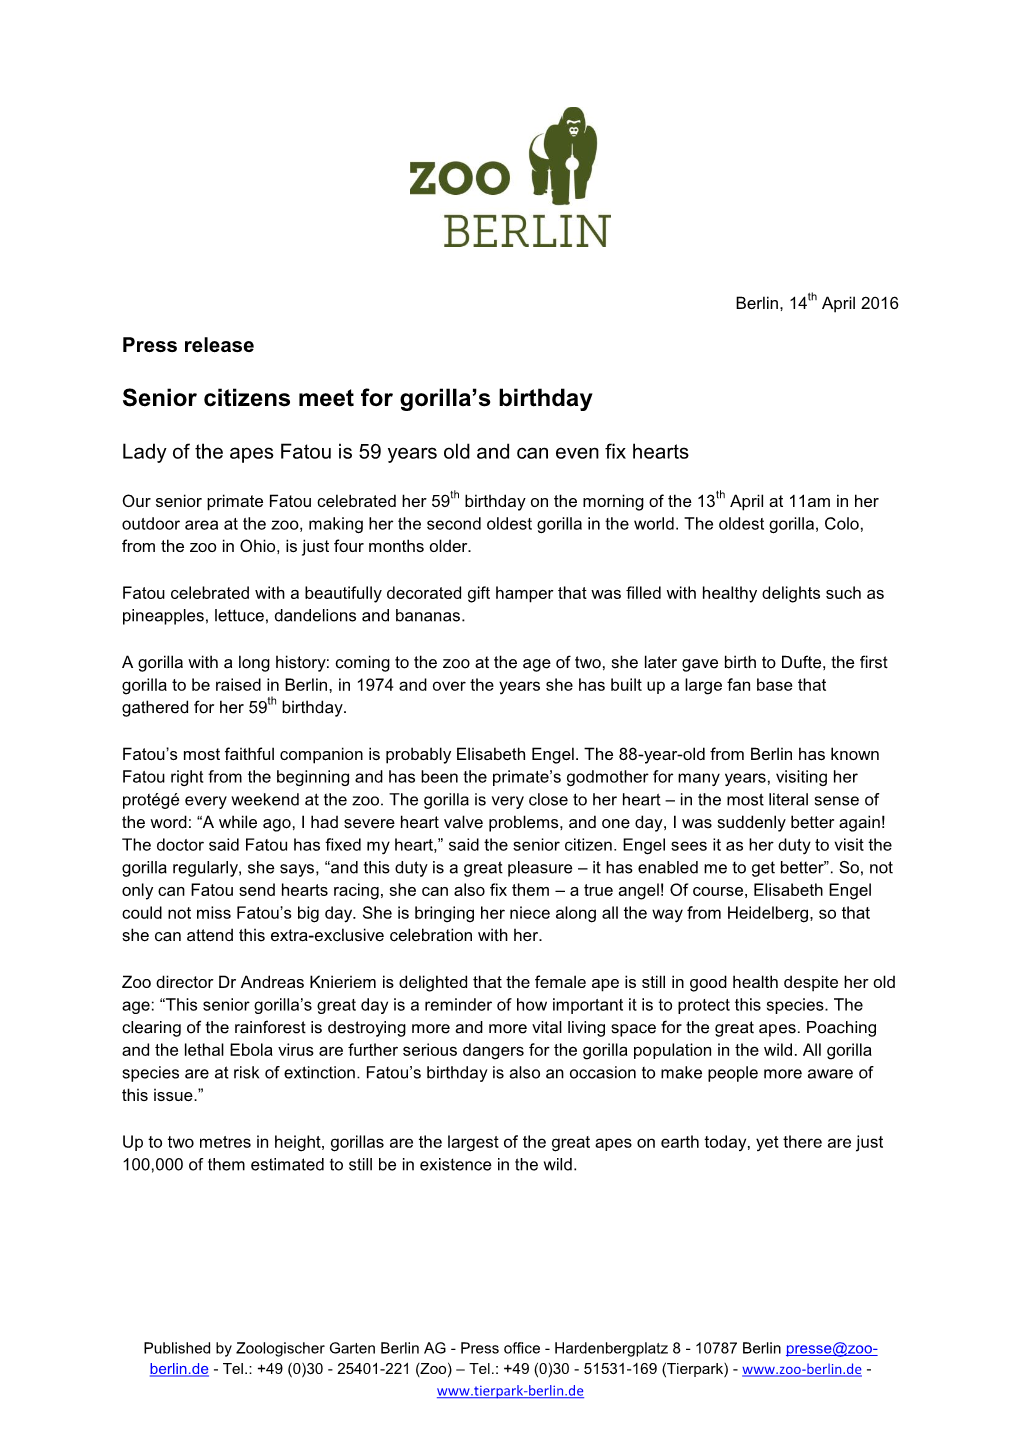 Senior Citizens Meet for Gorilla's Birthday